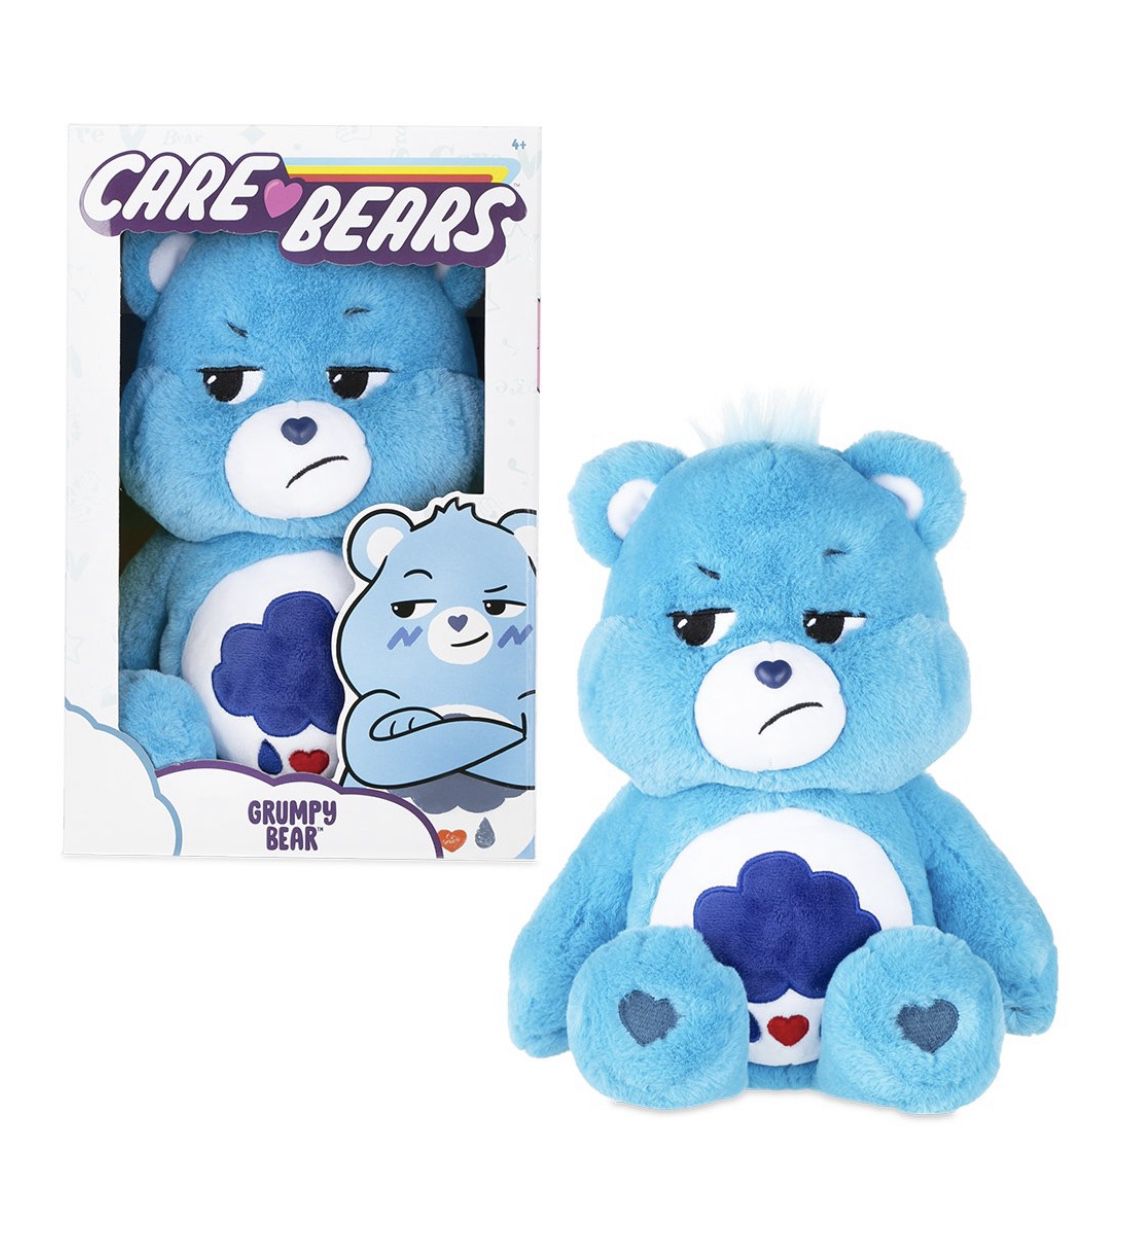 Care Bears grumpy bear